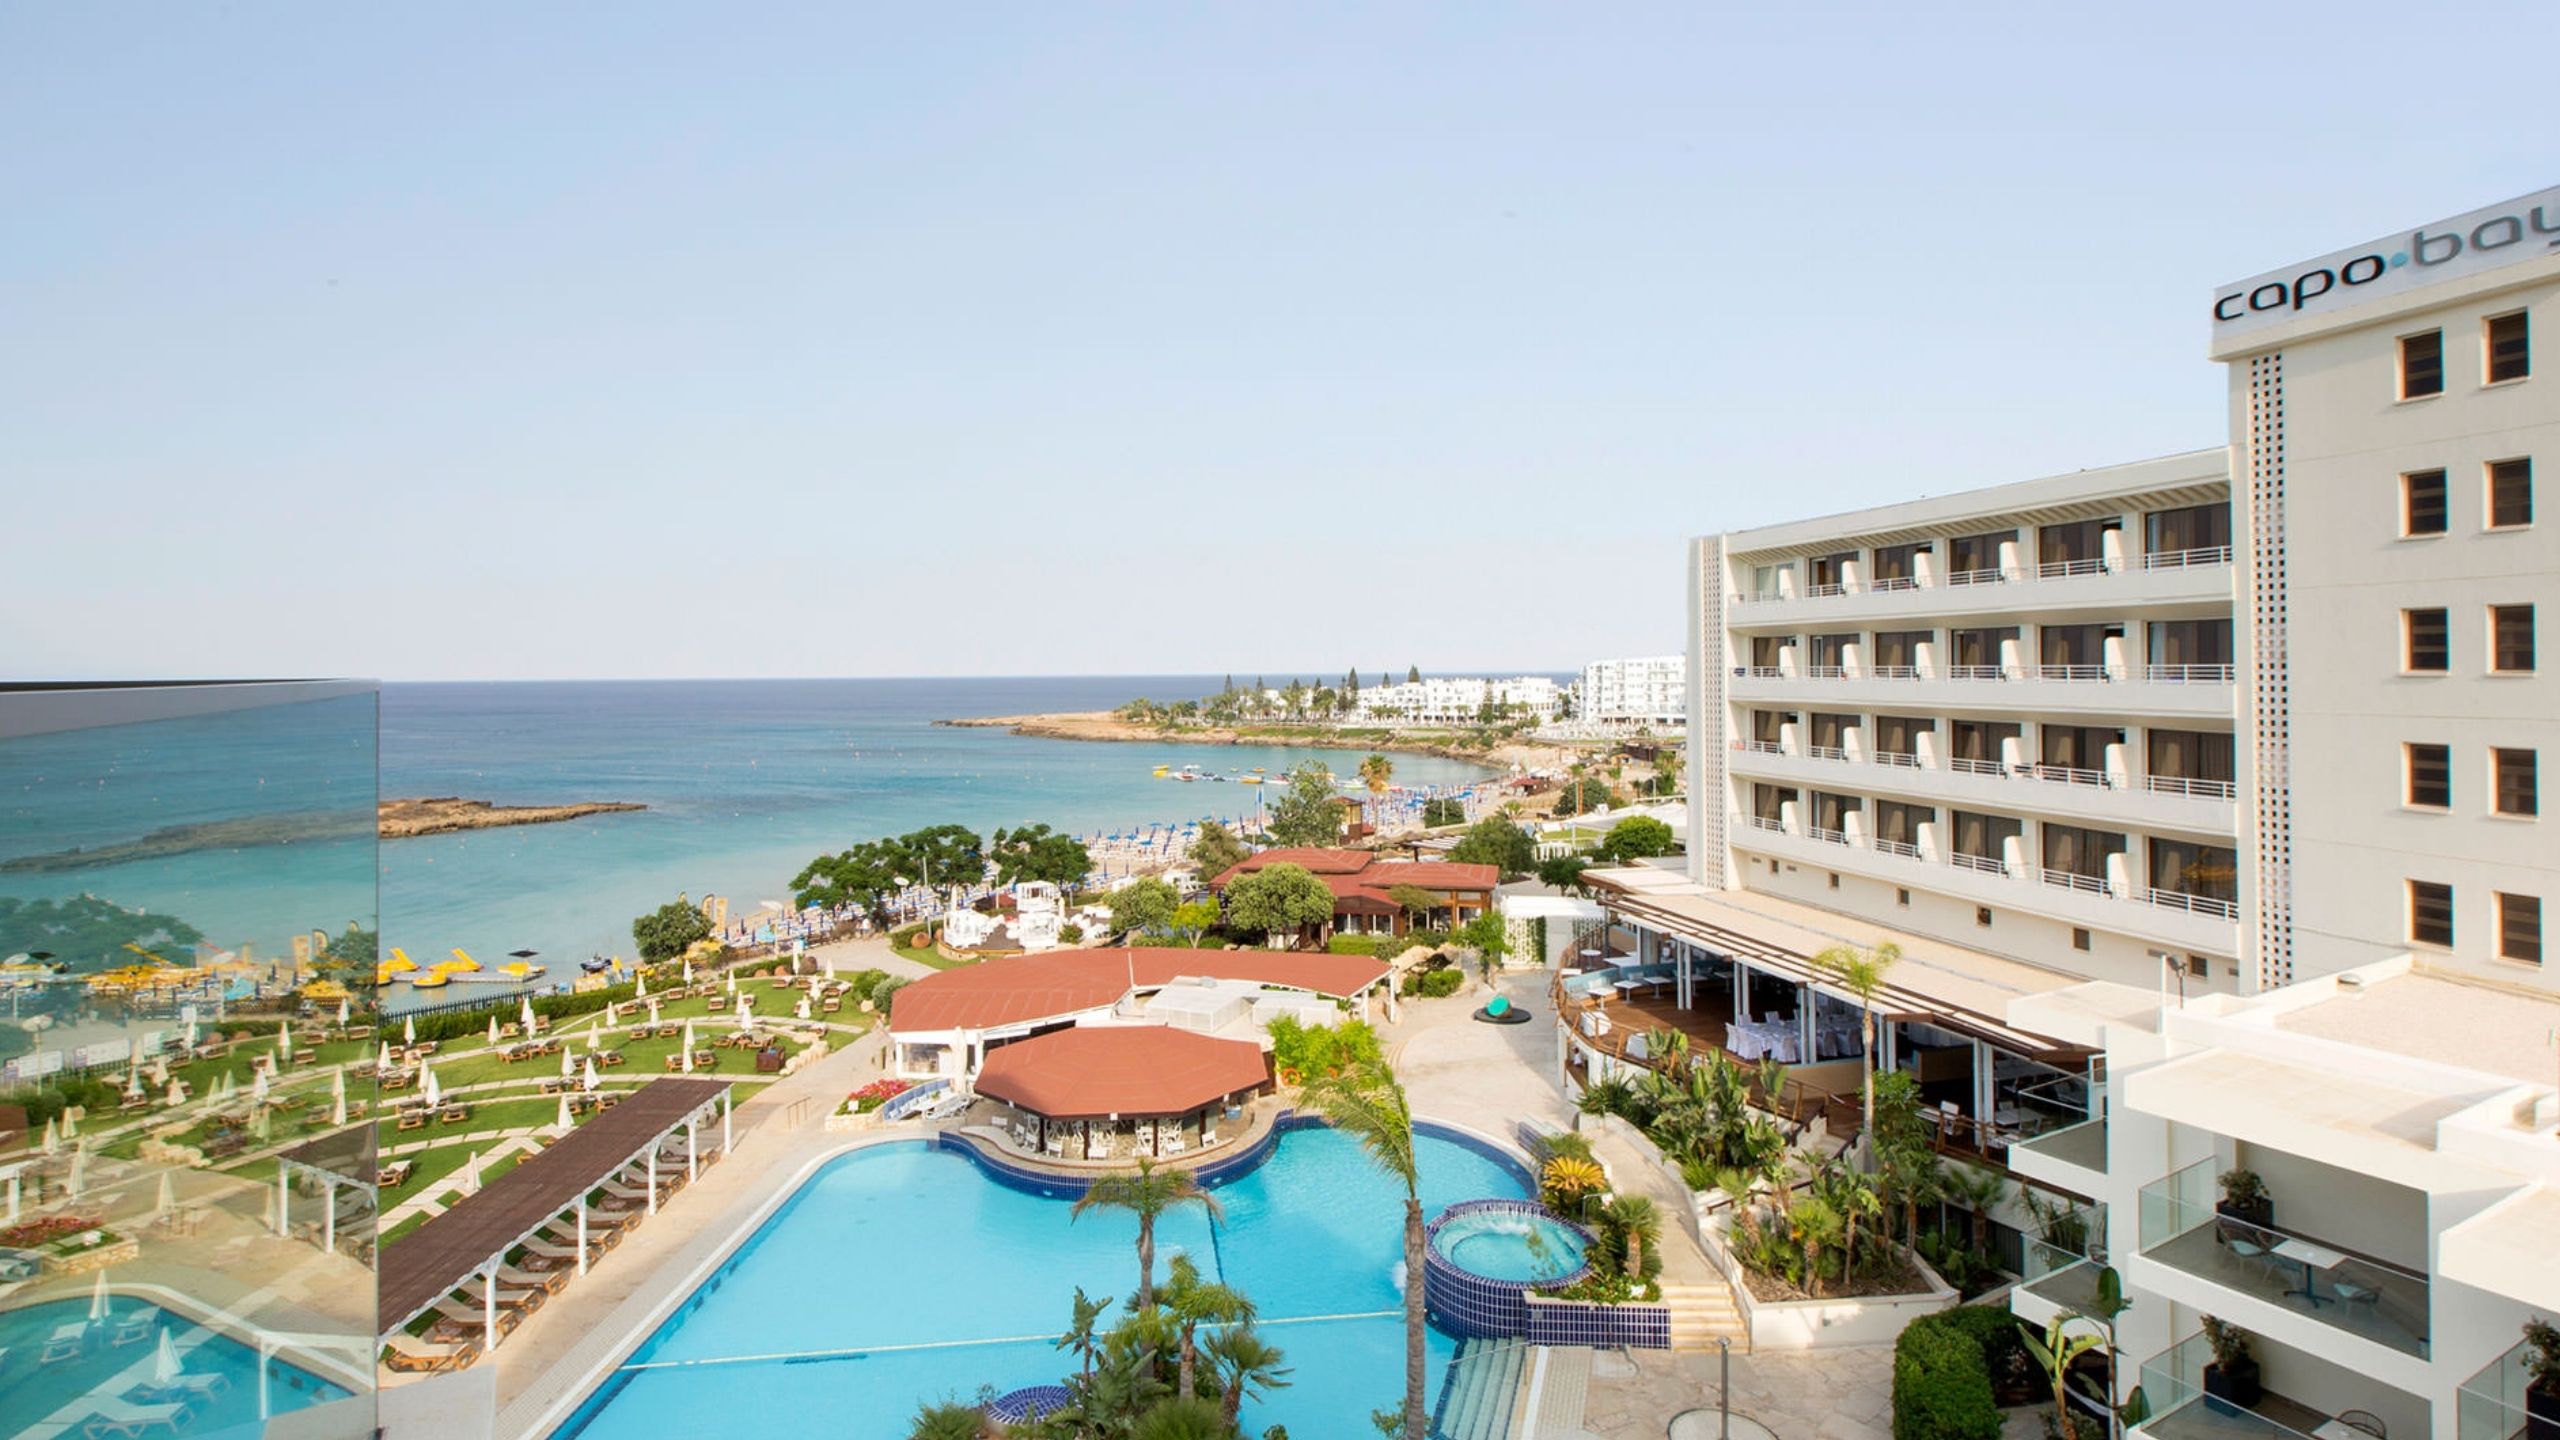 Capo Bay Hotel in Cyprus